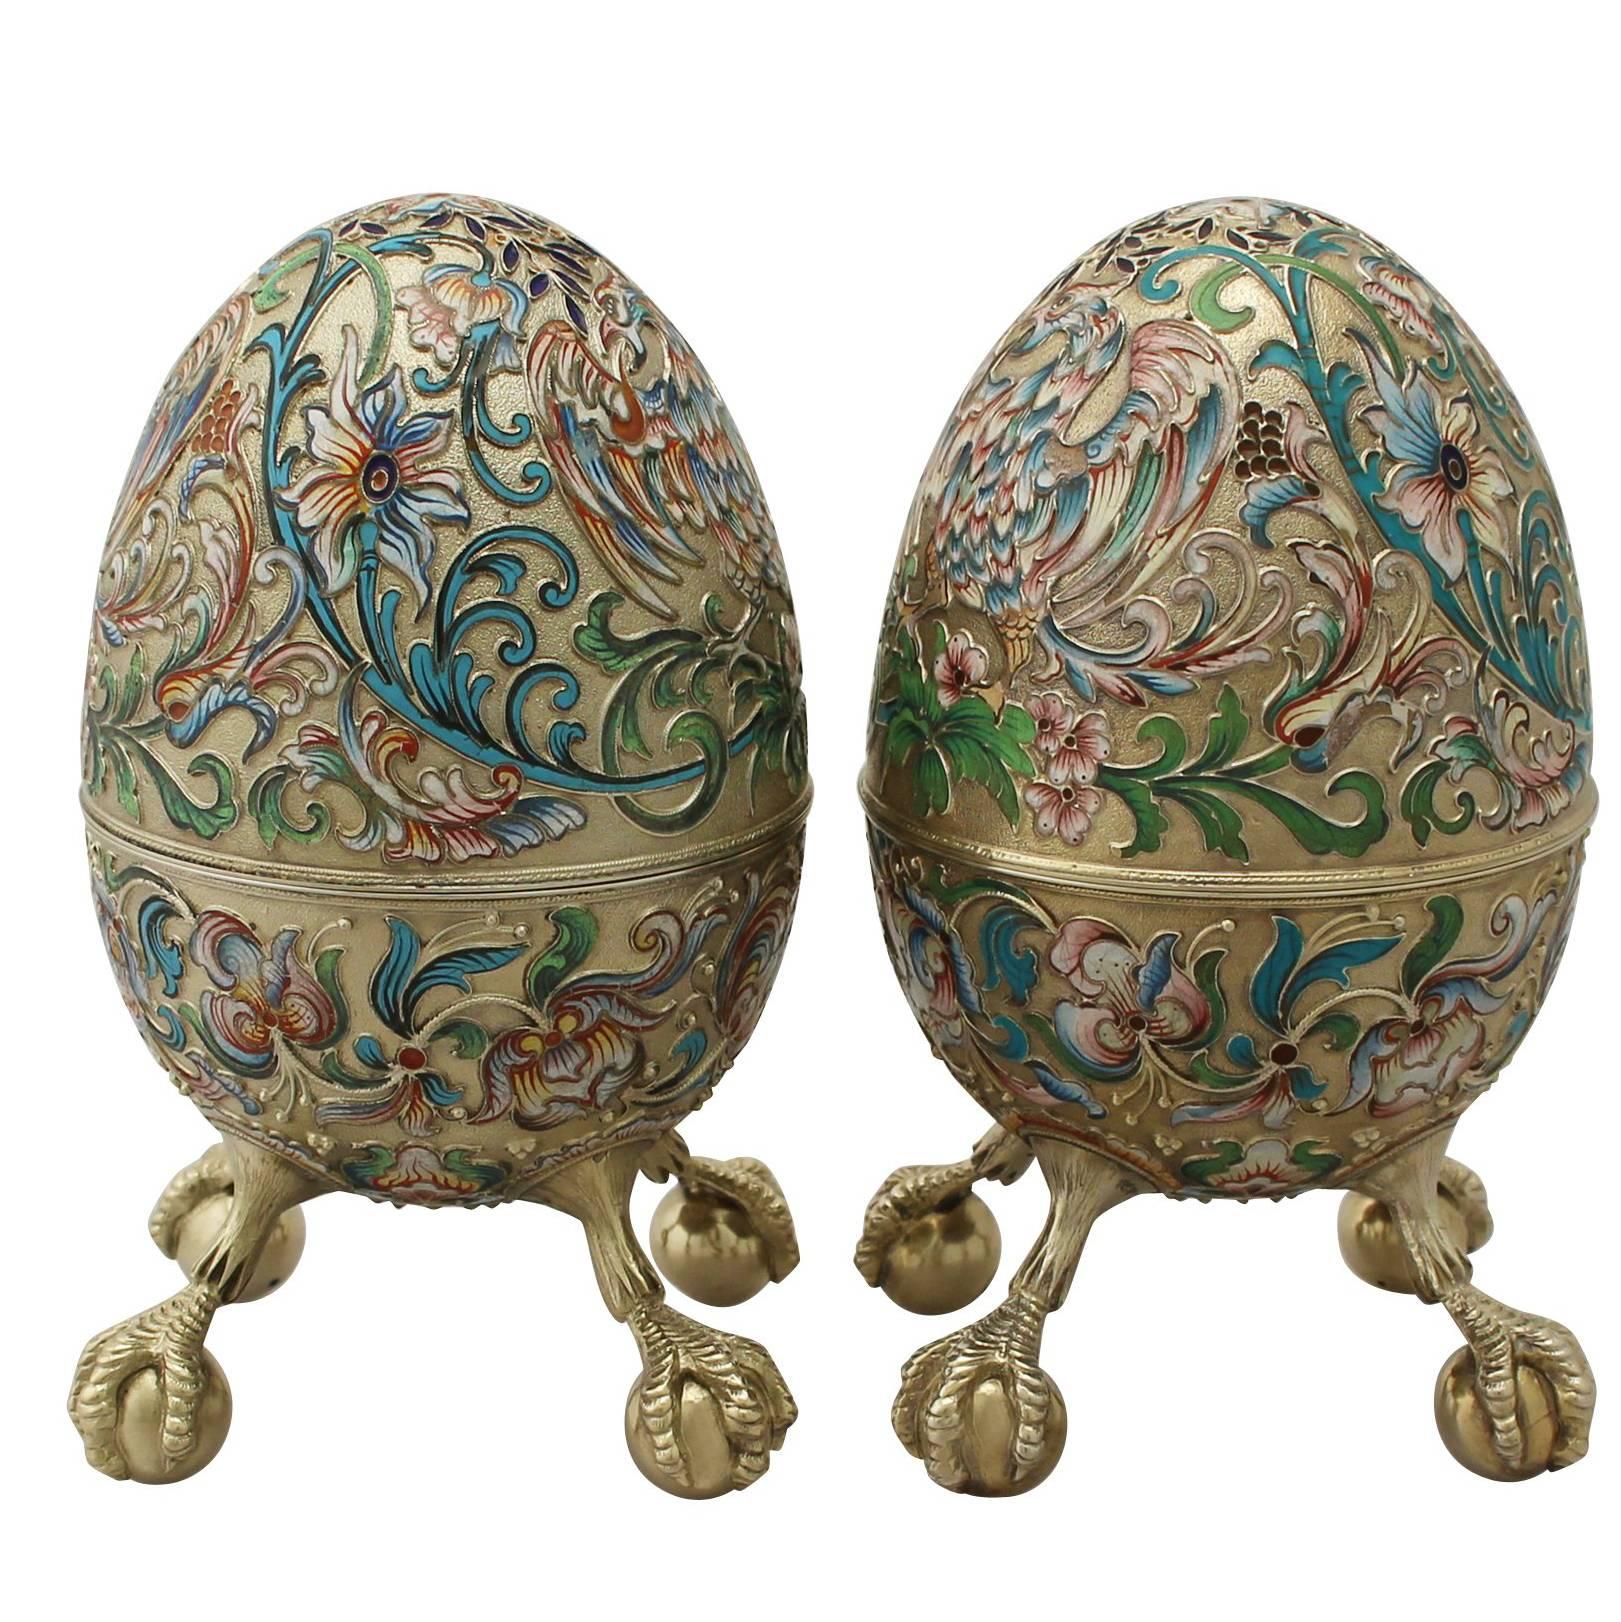 1910s Antique Russian Silver Gilt and Polychrome Cloisonné Enamel Eggs